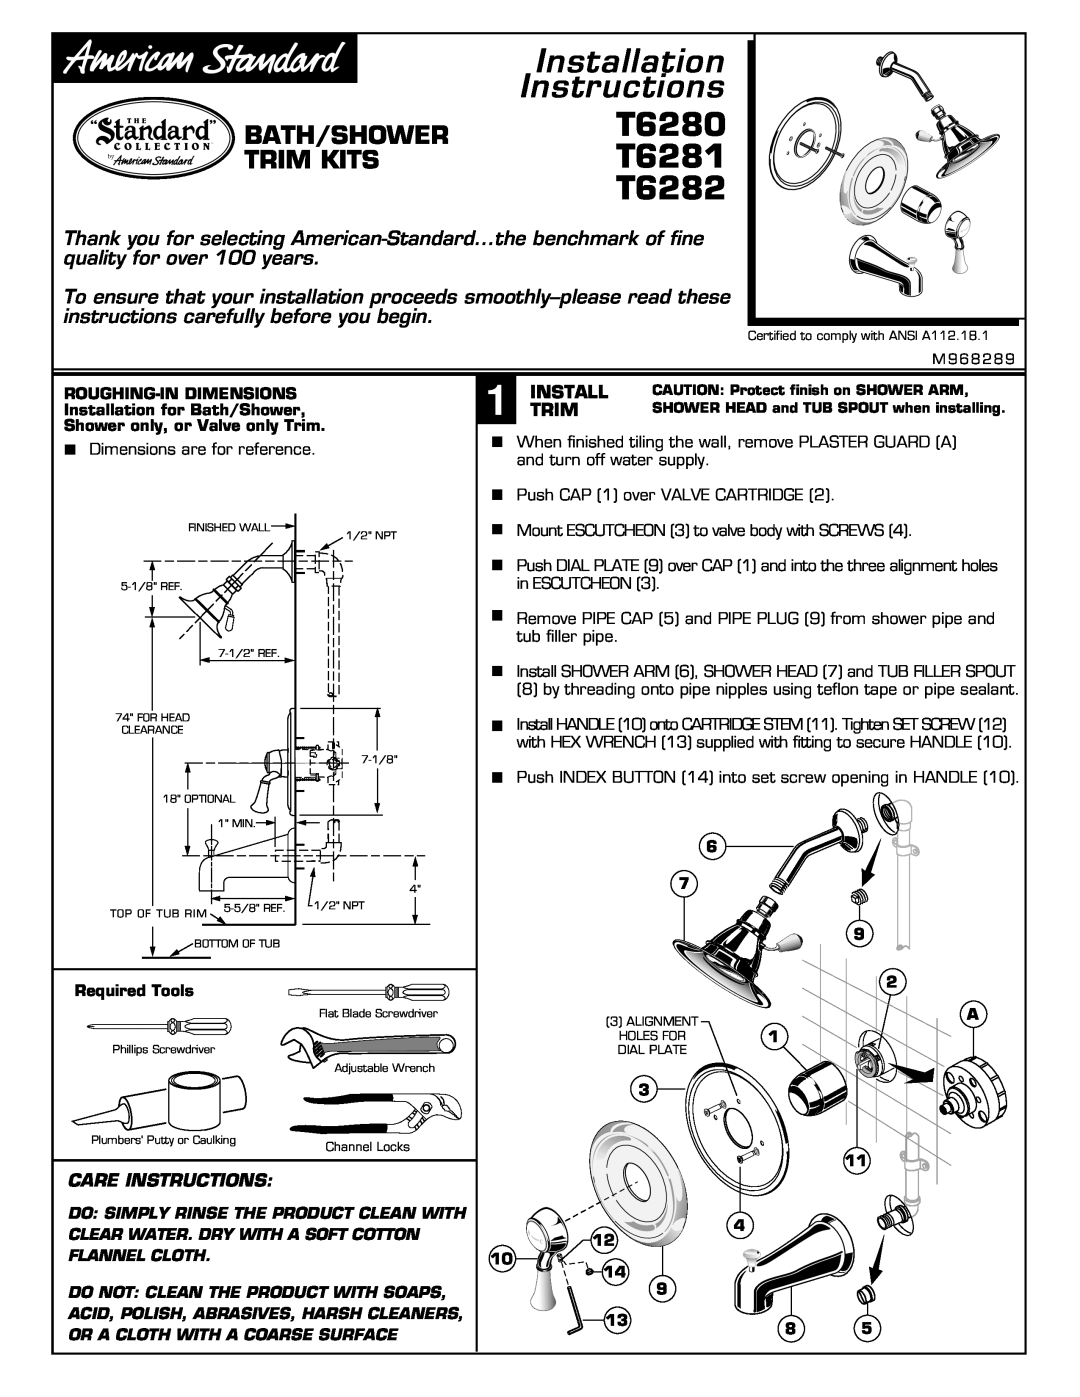 American Standard installation instructions T6280 T6281 T6282, Bath/Shower Trim Kits, Installation Instructions 